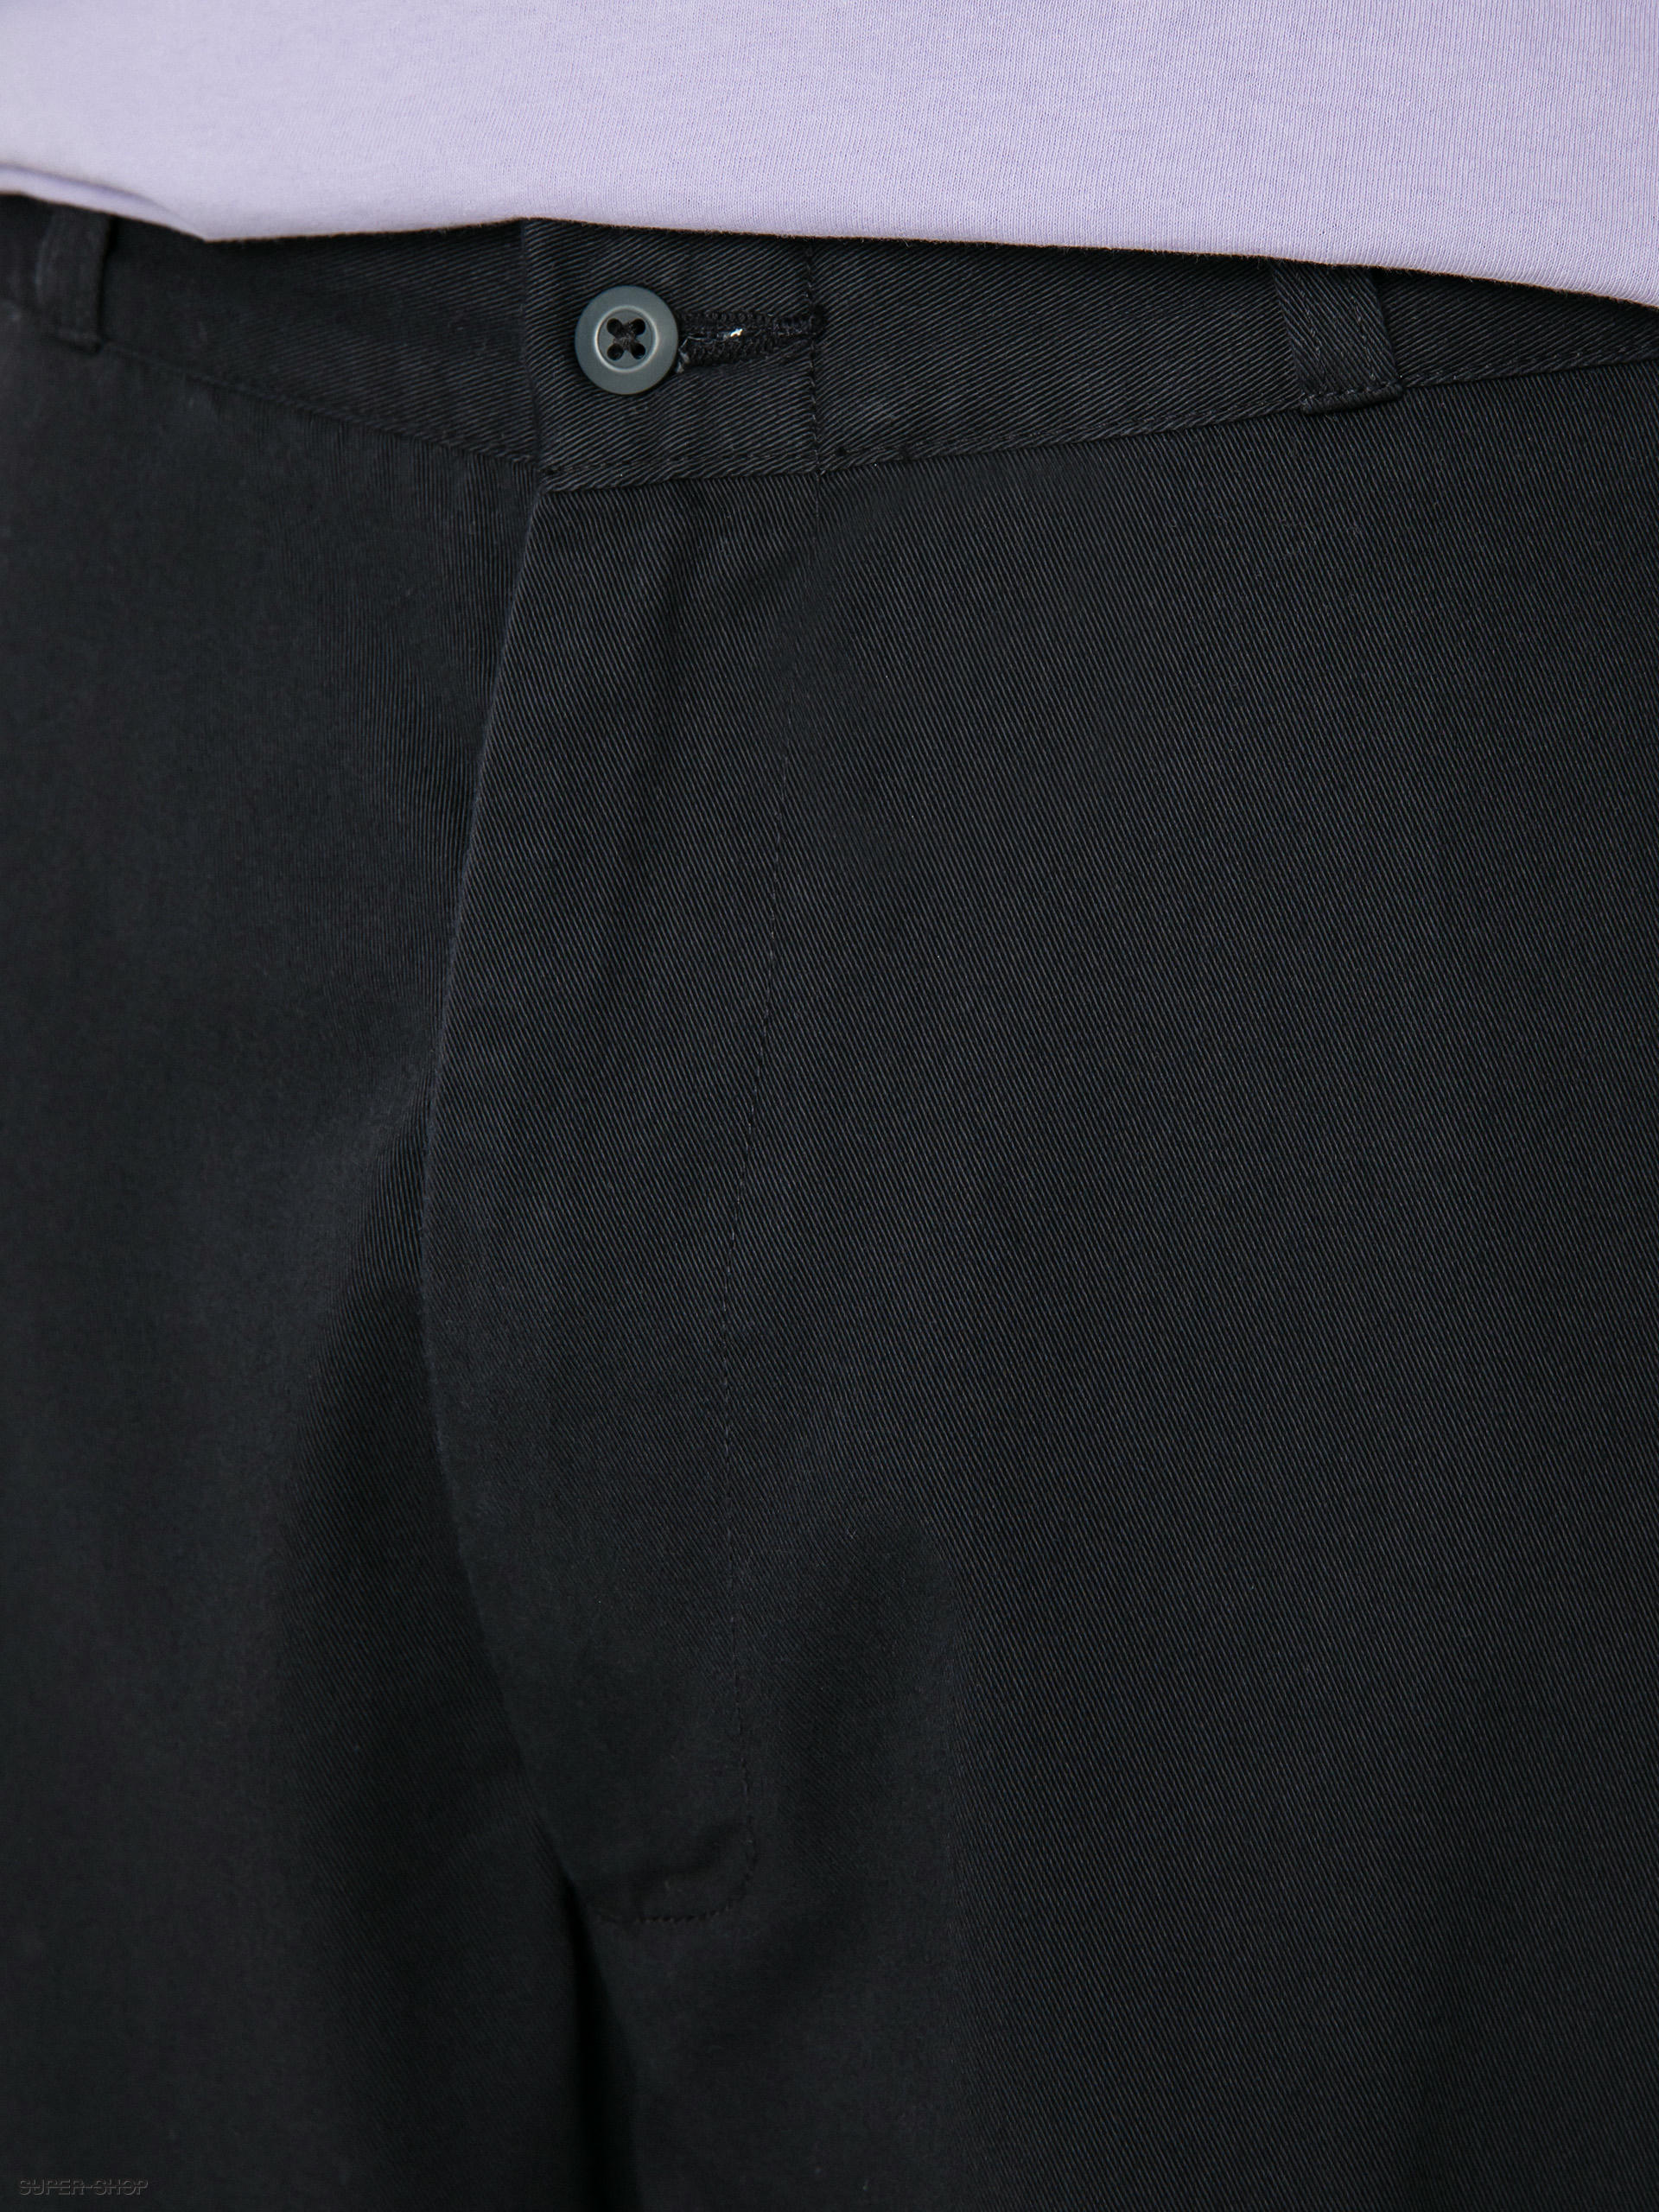 Vintage Grey Levis Dress Pants Straight Fit Black  Depop